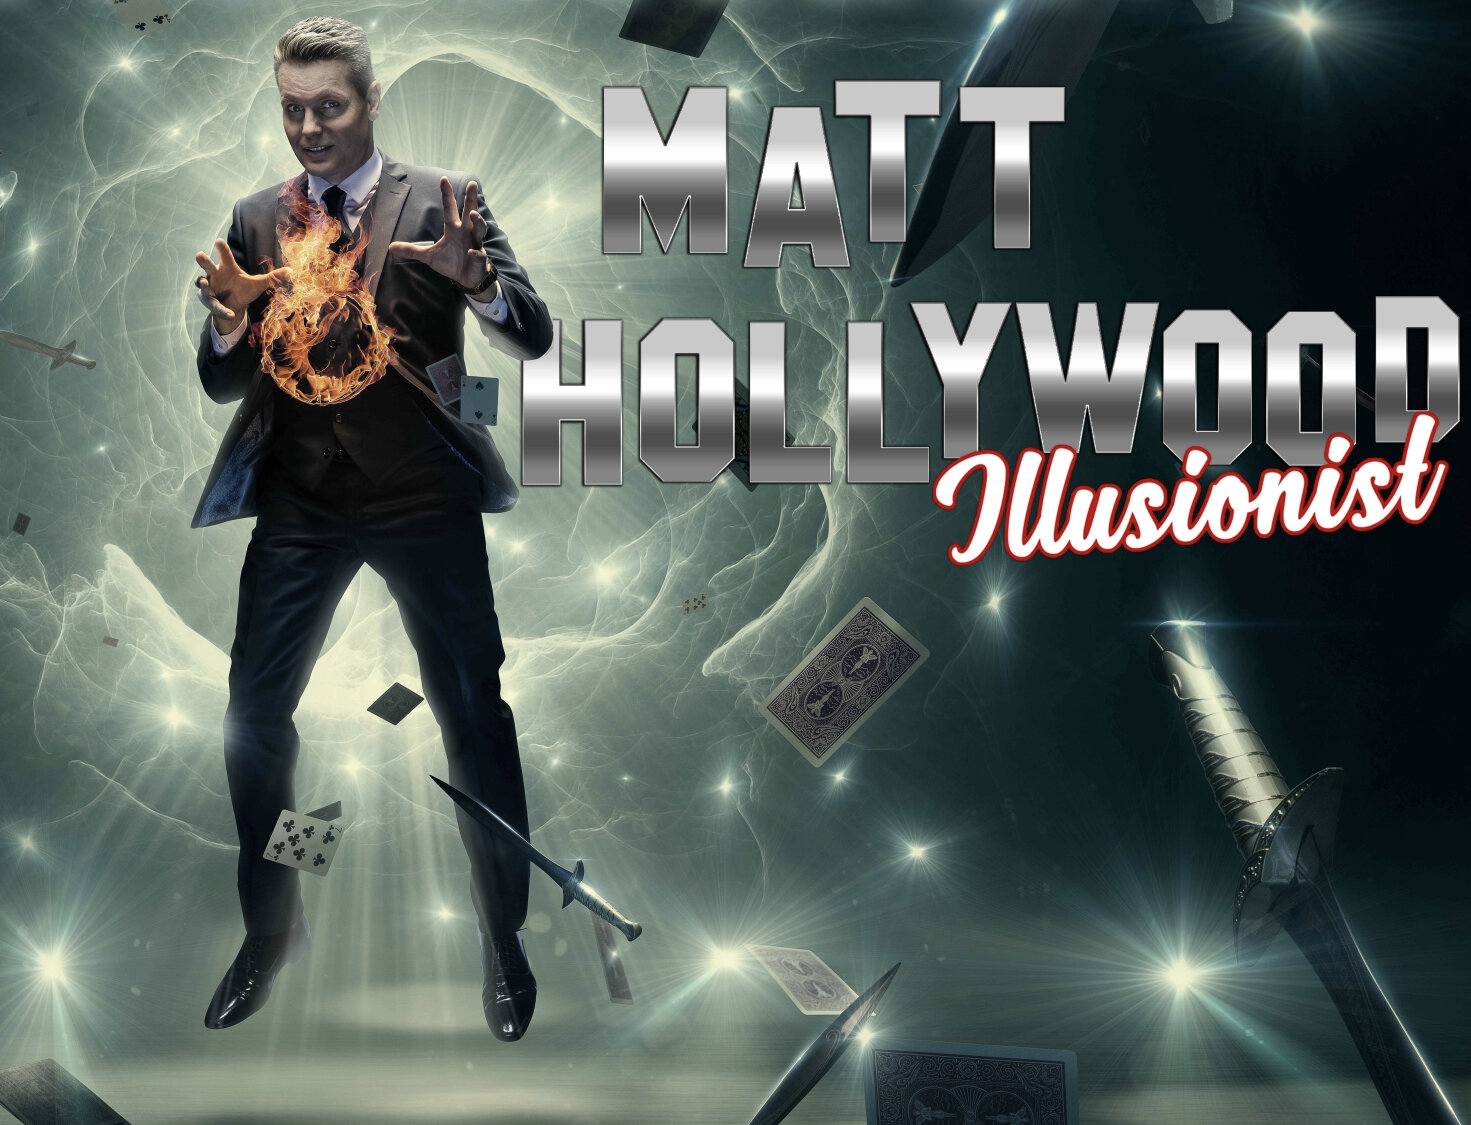 Magician Matt Hollywood